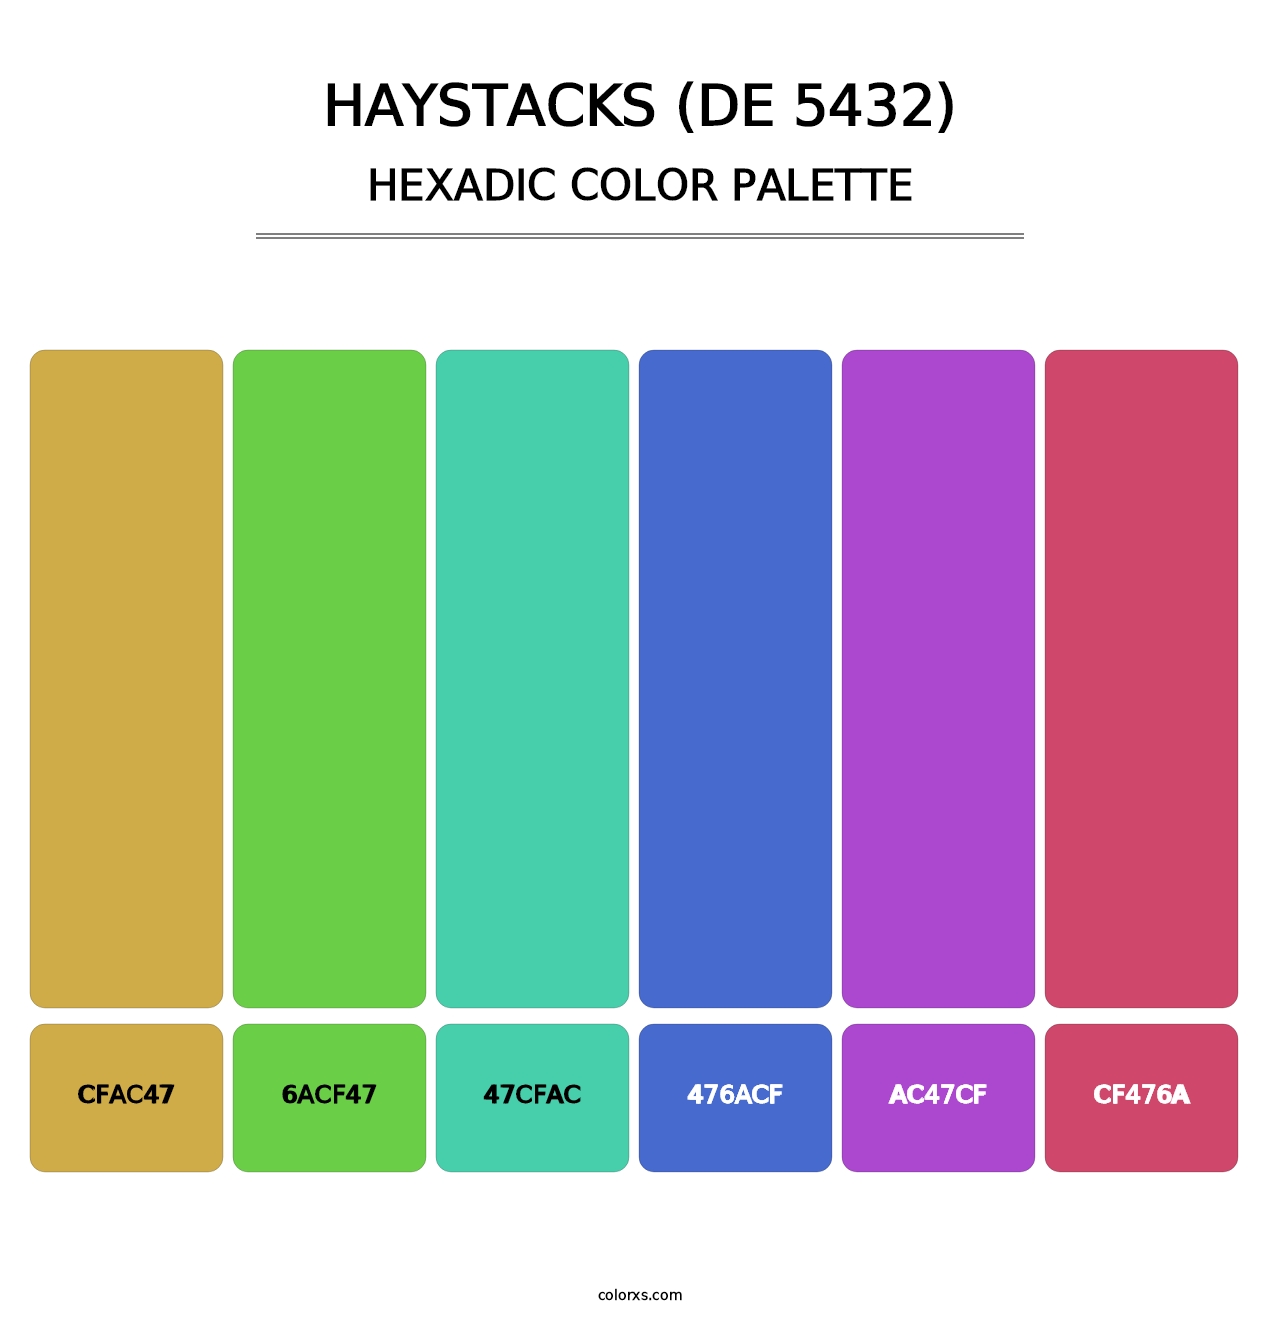 Haystacks (DE 5432) - Hexadic Color Palette